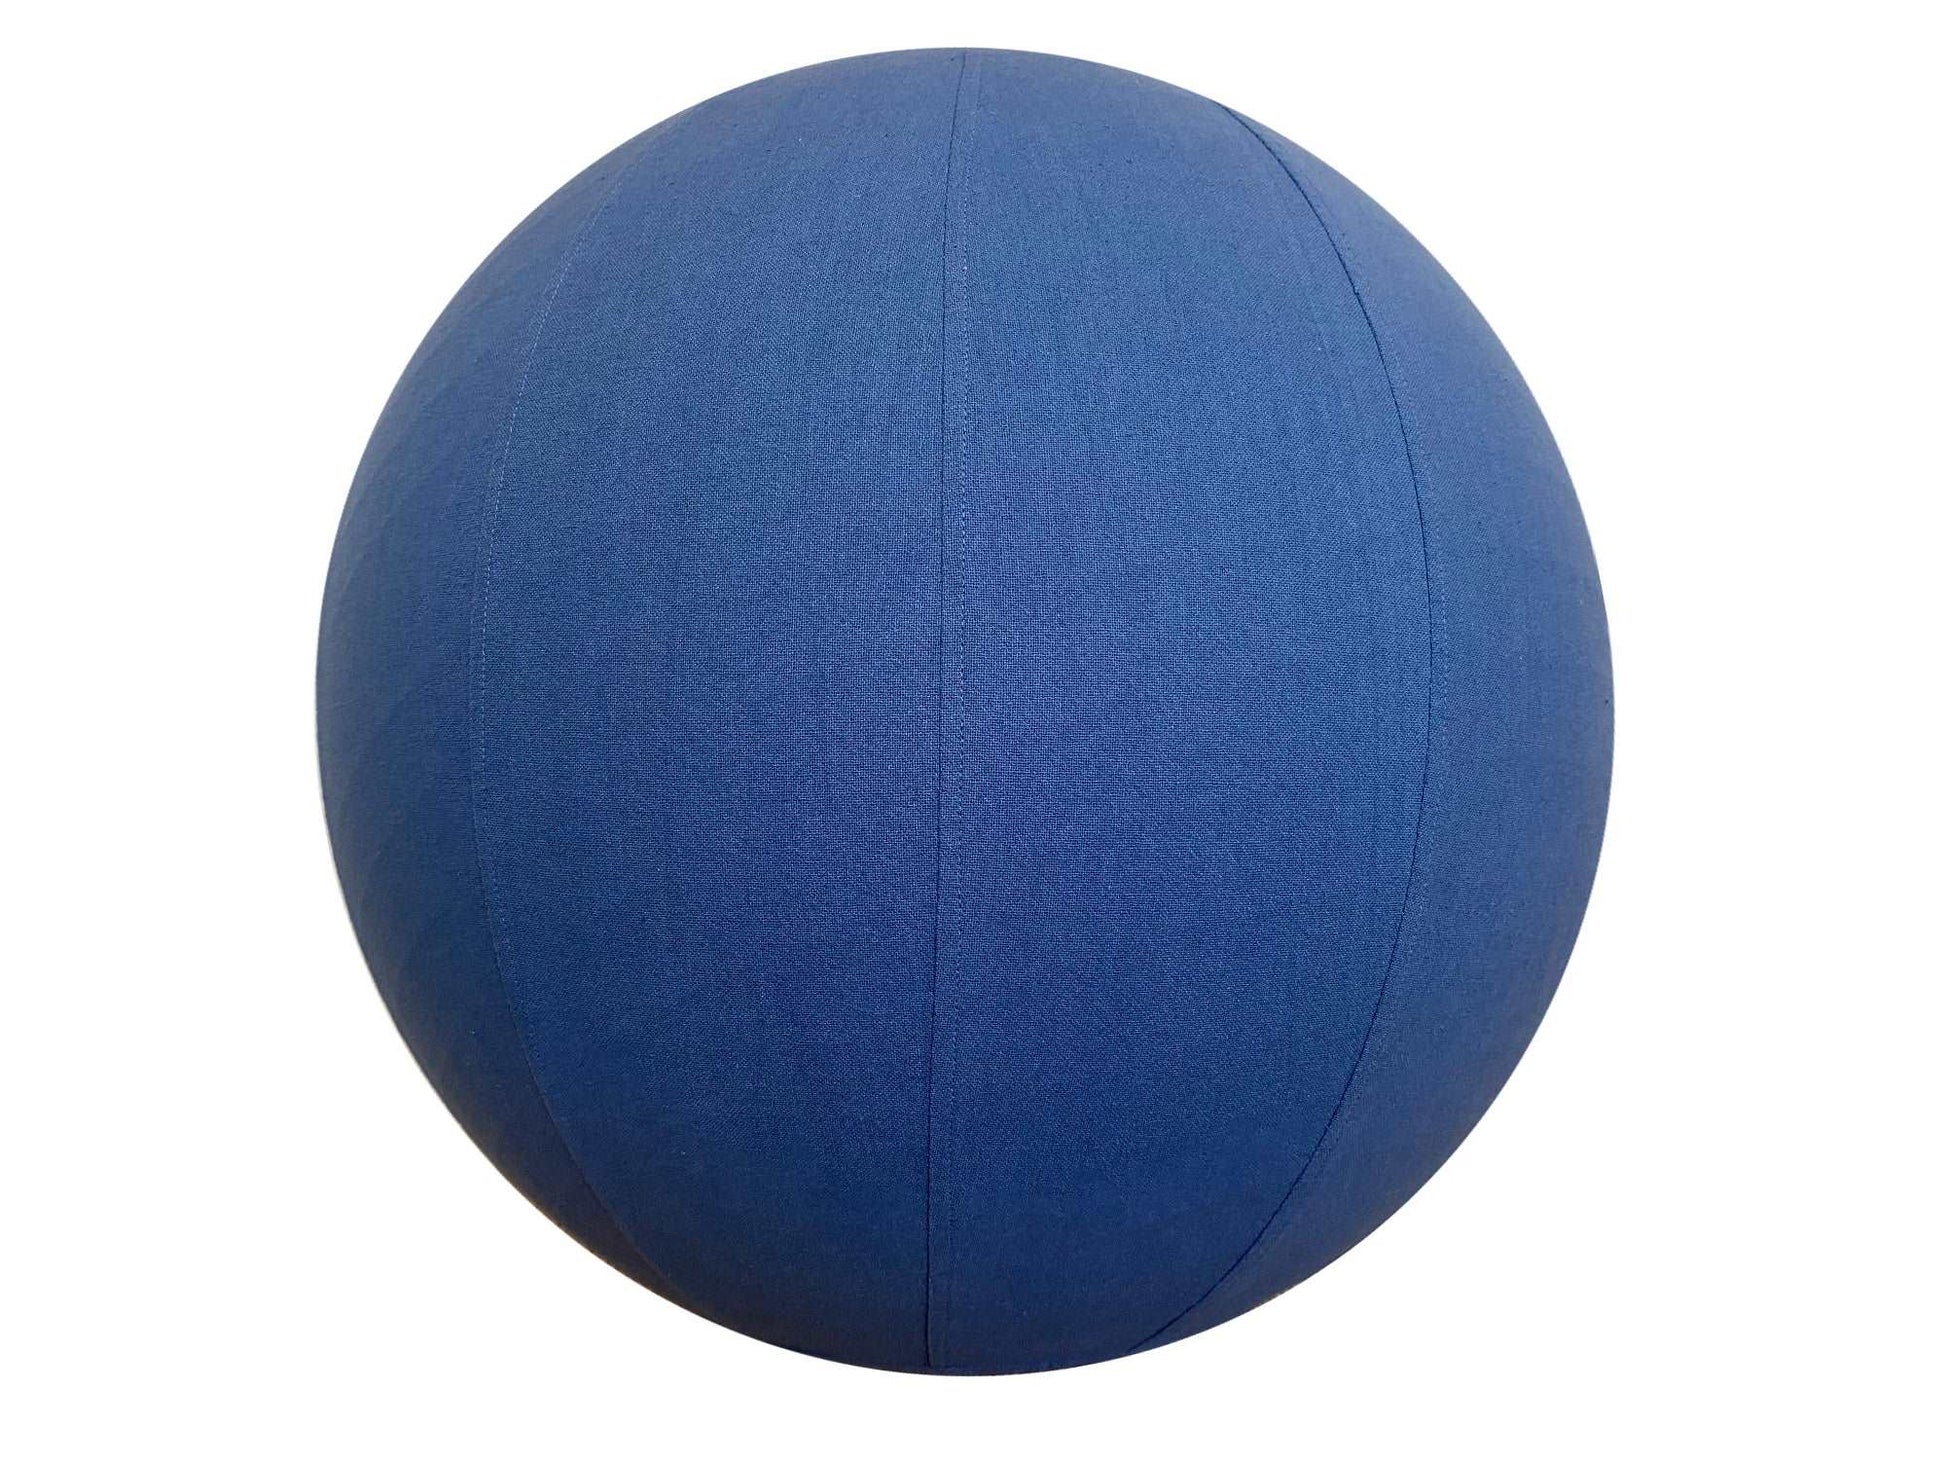 55cm Balance Ball / Yoga Ball Cover: Rocky Mountain Sky Blue